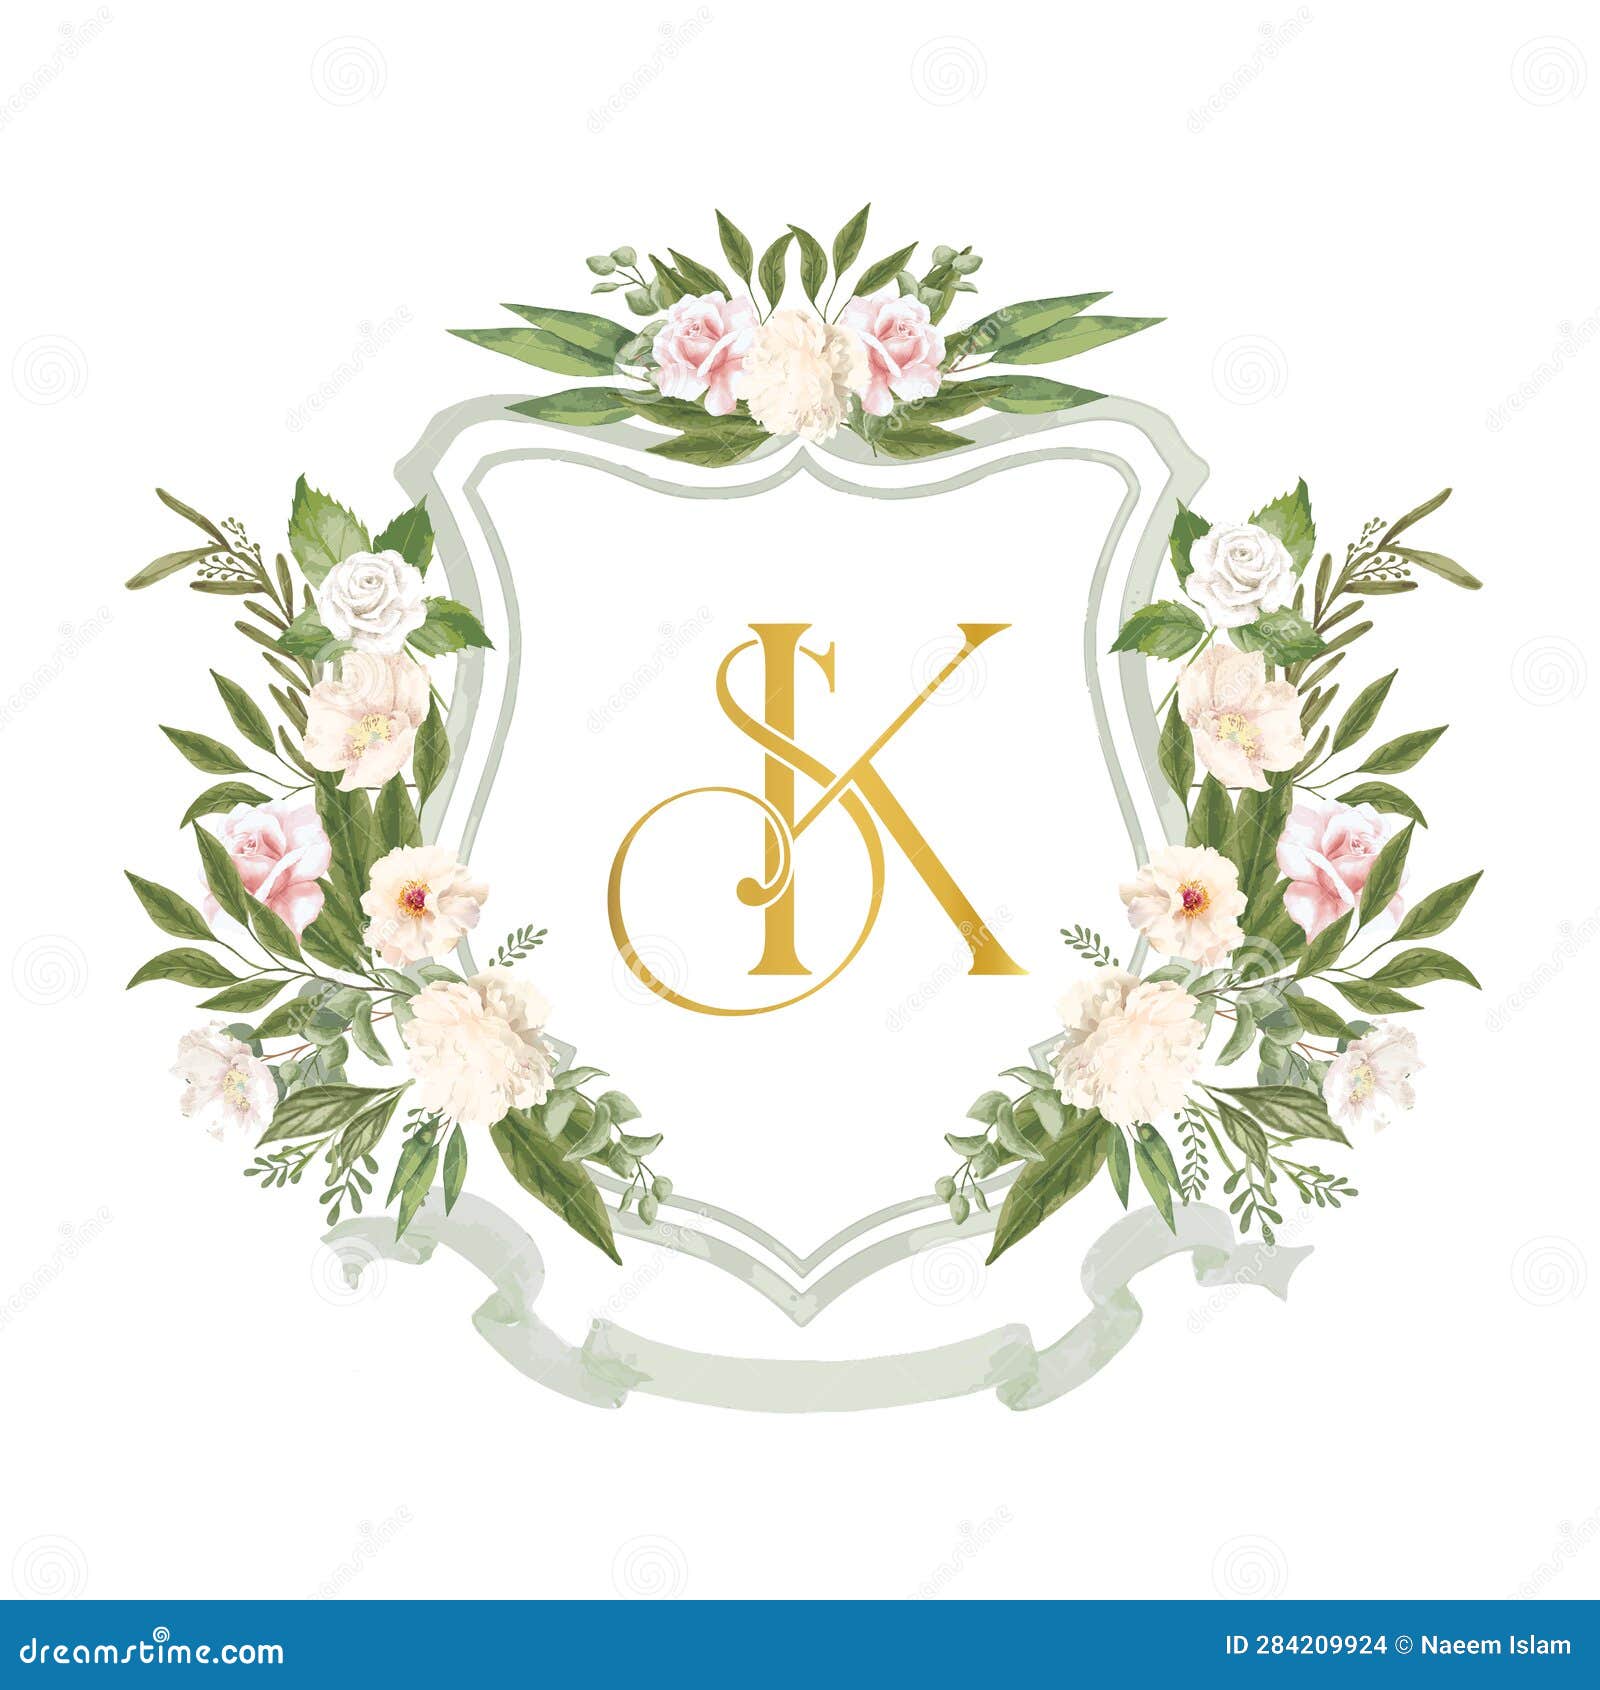 sk, ks initial wedding crest logo monogram